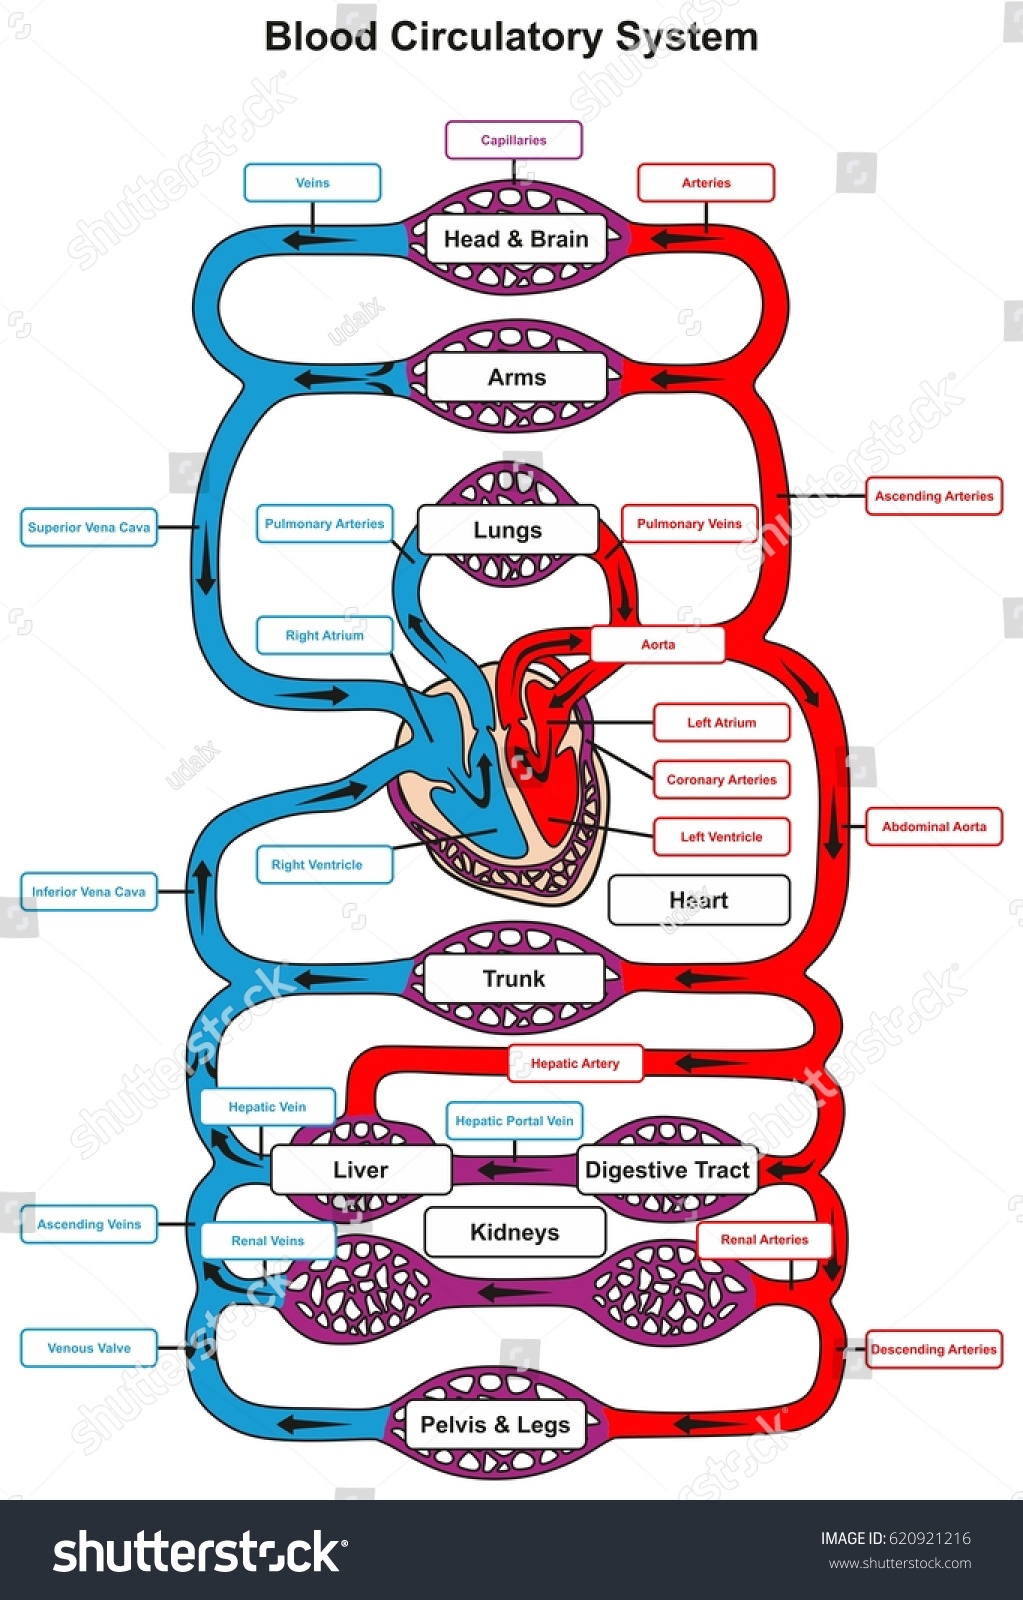 Blood Circulatory System Human Body Infographic Stock ...